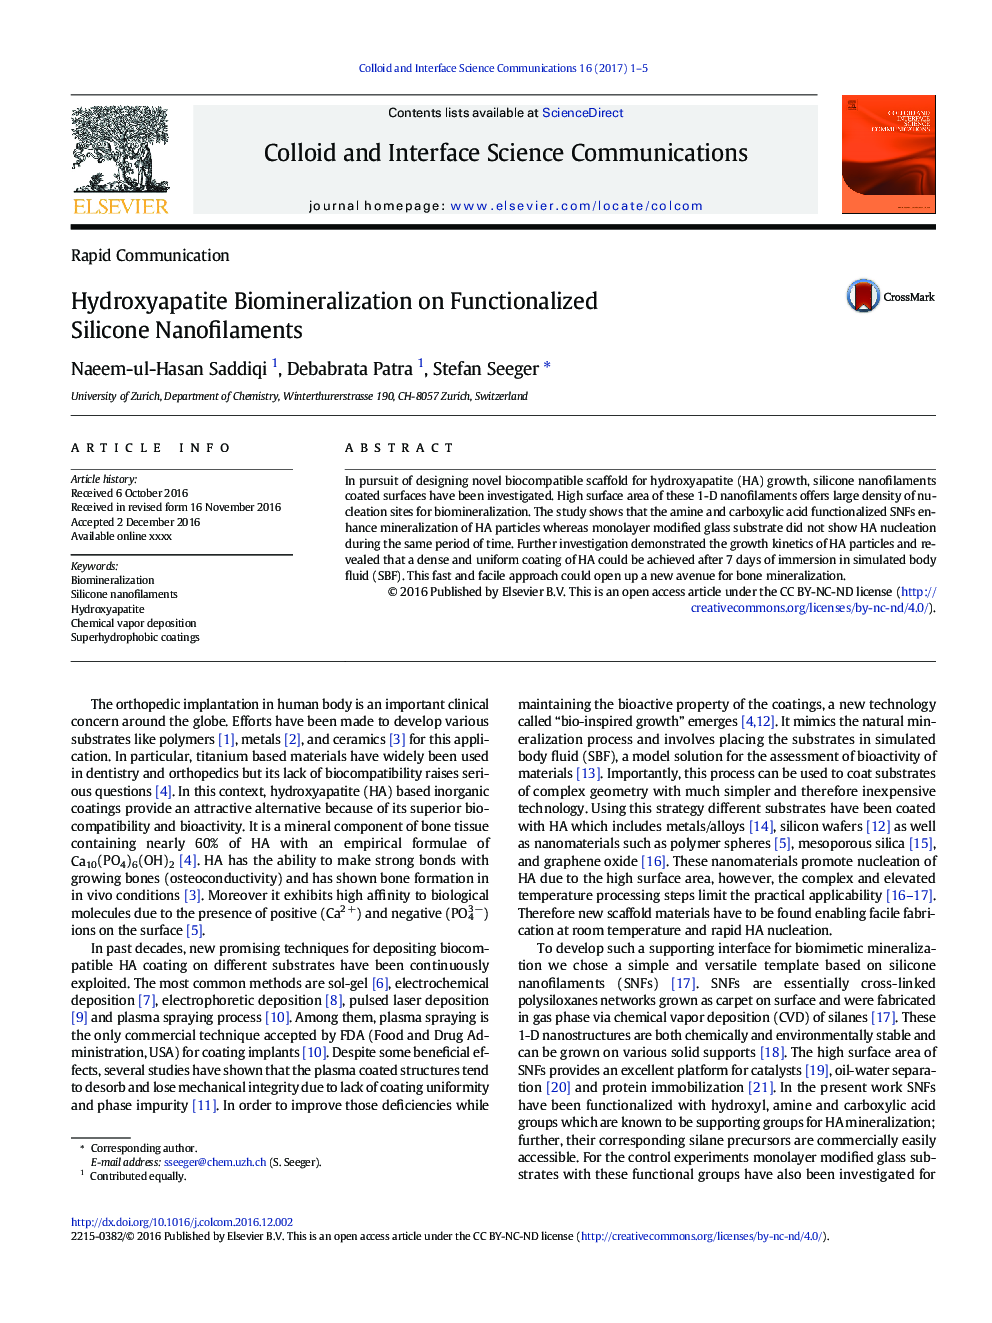 Hydroxyapatite Biomineralization on Functionalized Silicone Nanofilaments